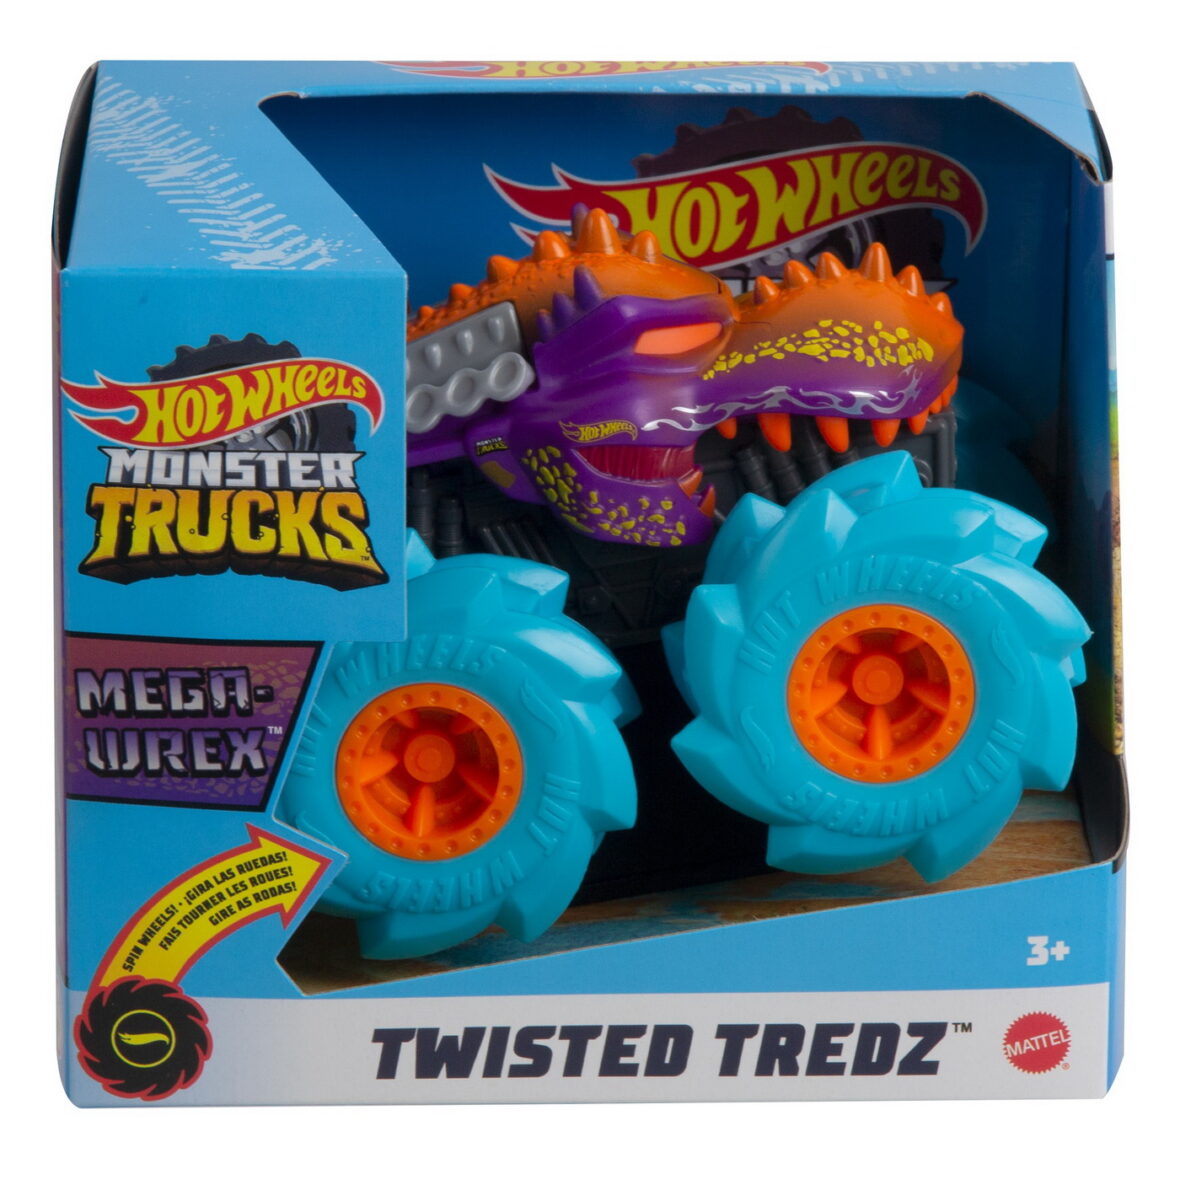 Monster truck masinuta twister tredz Mega Wrex, + 3 ani, Hot Wheels